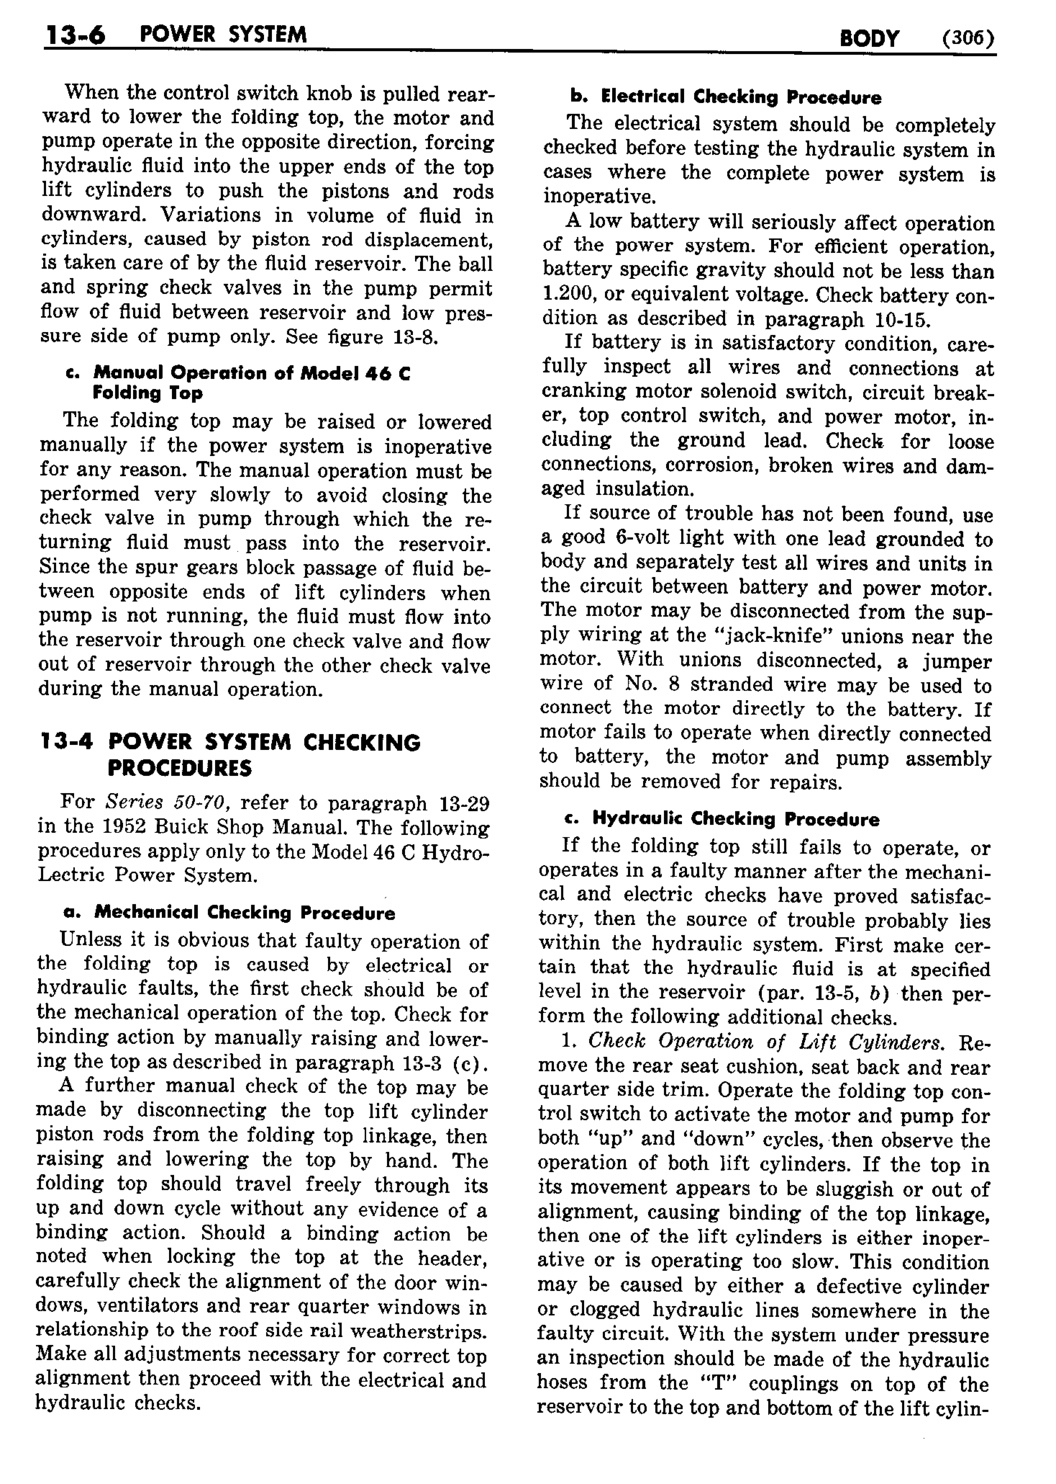 n_14 1953 Buick Shop Manual - Body-006-006.jpg